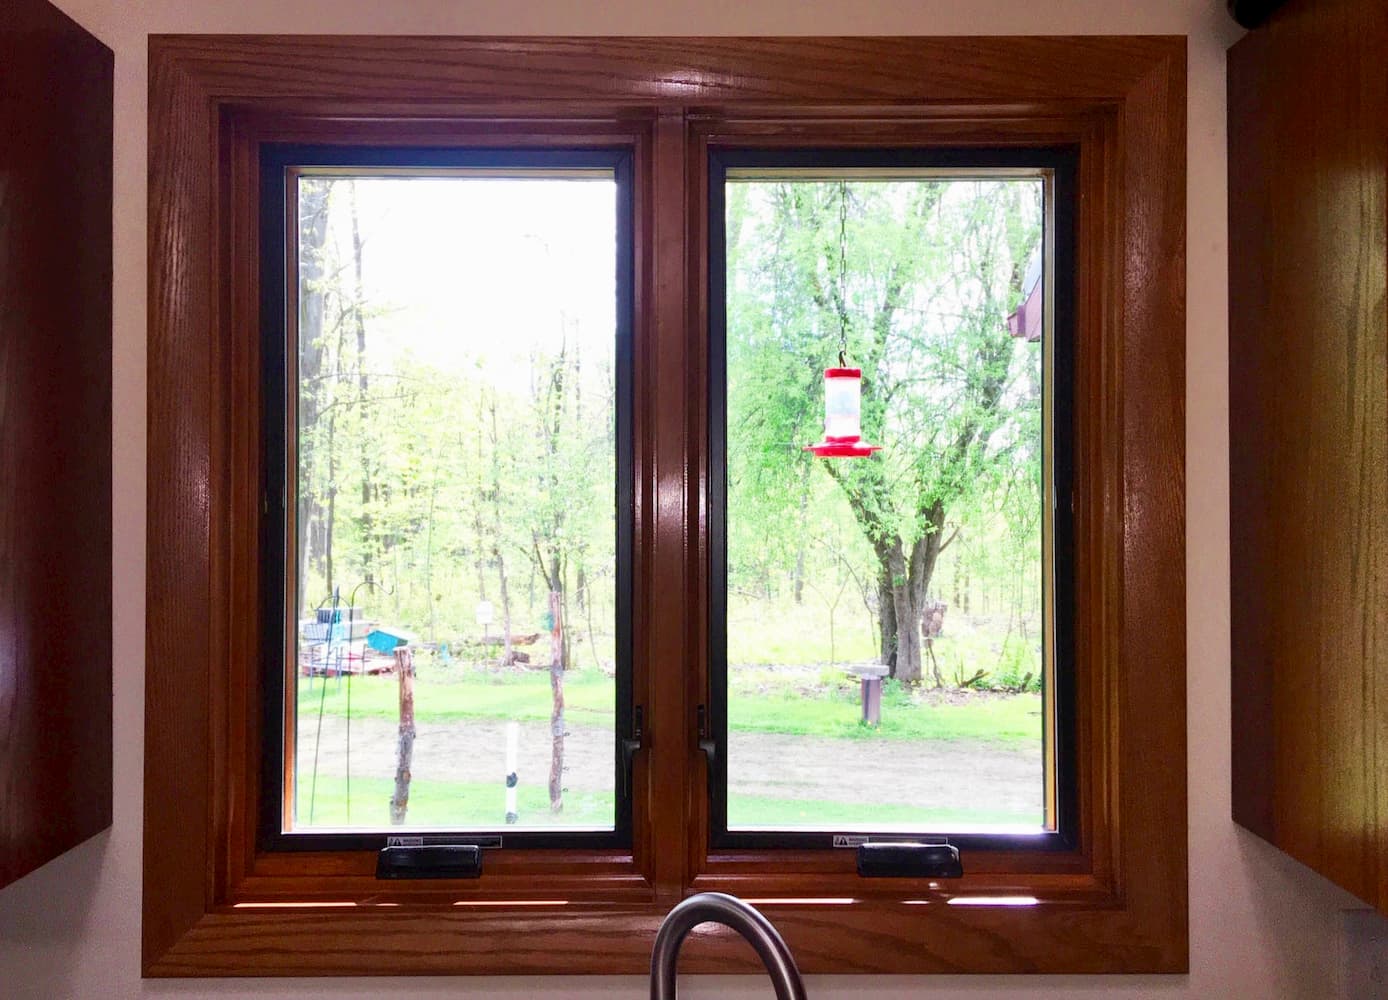 Interior view of new wood casement windows over kitchen sink.